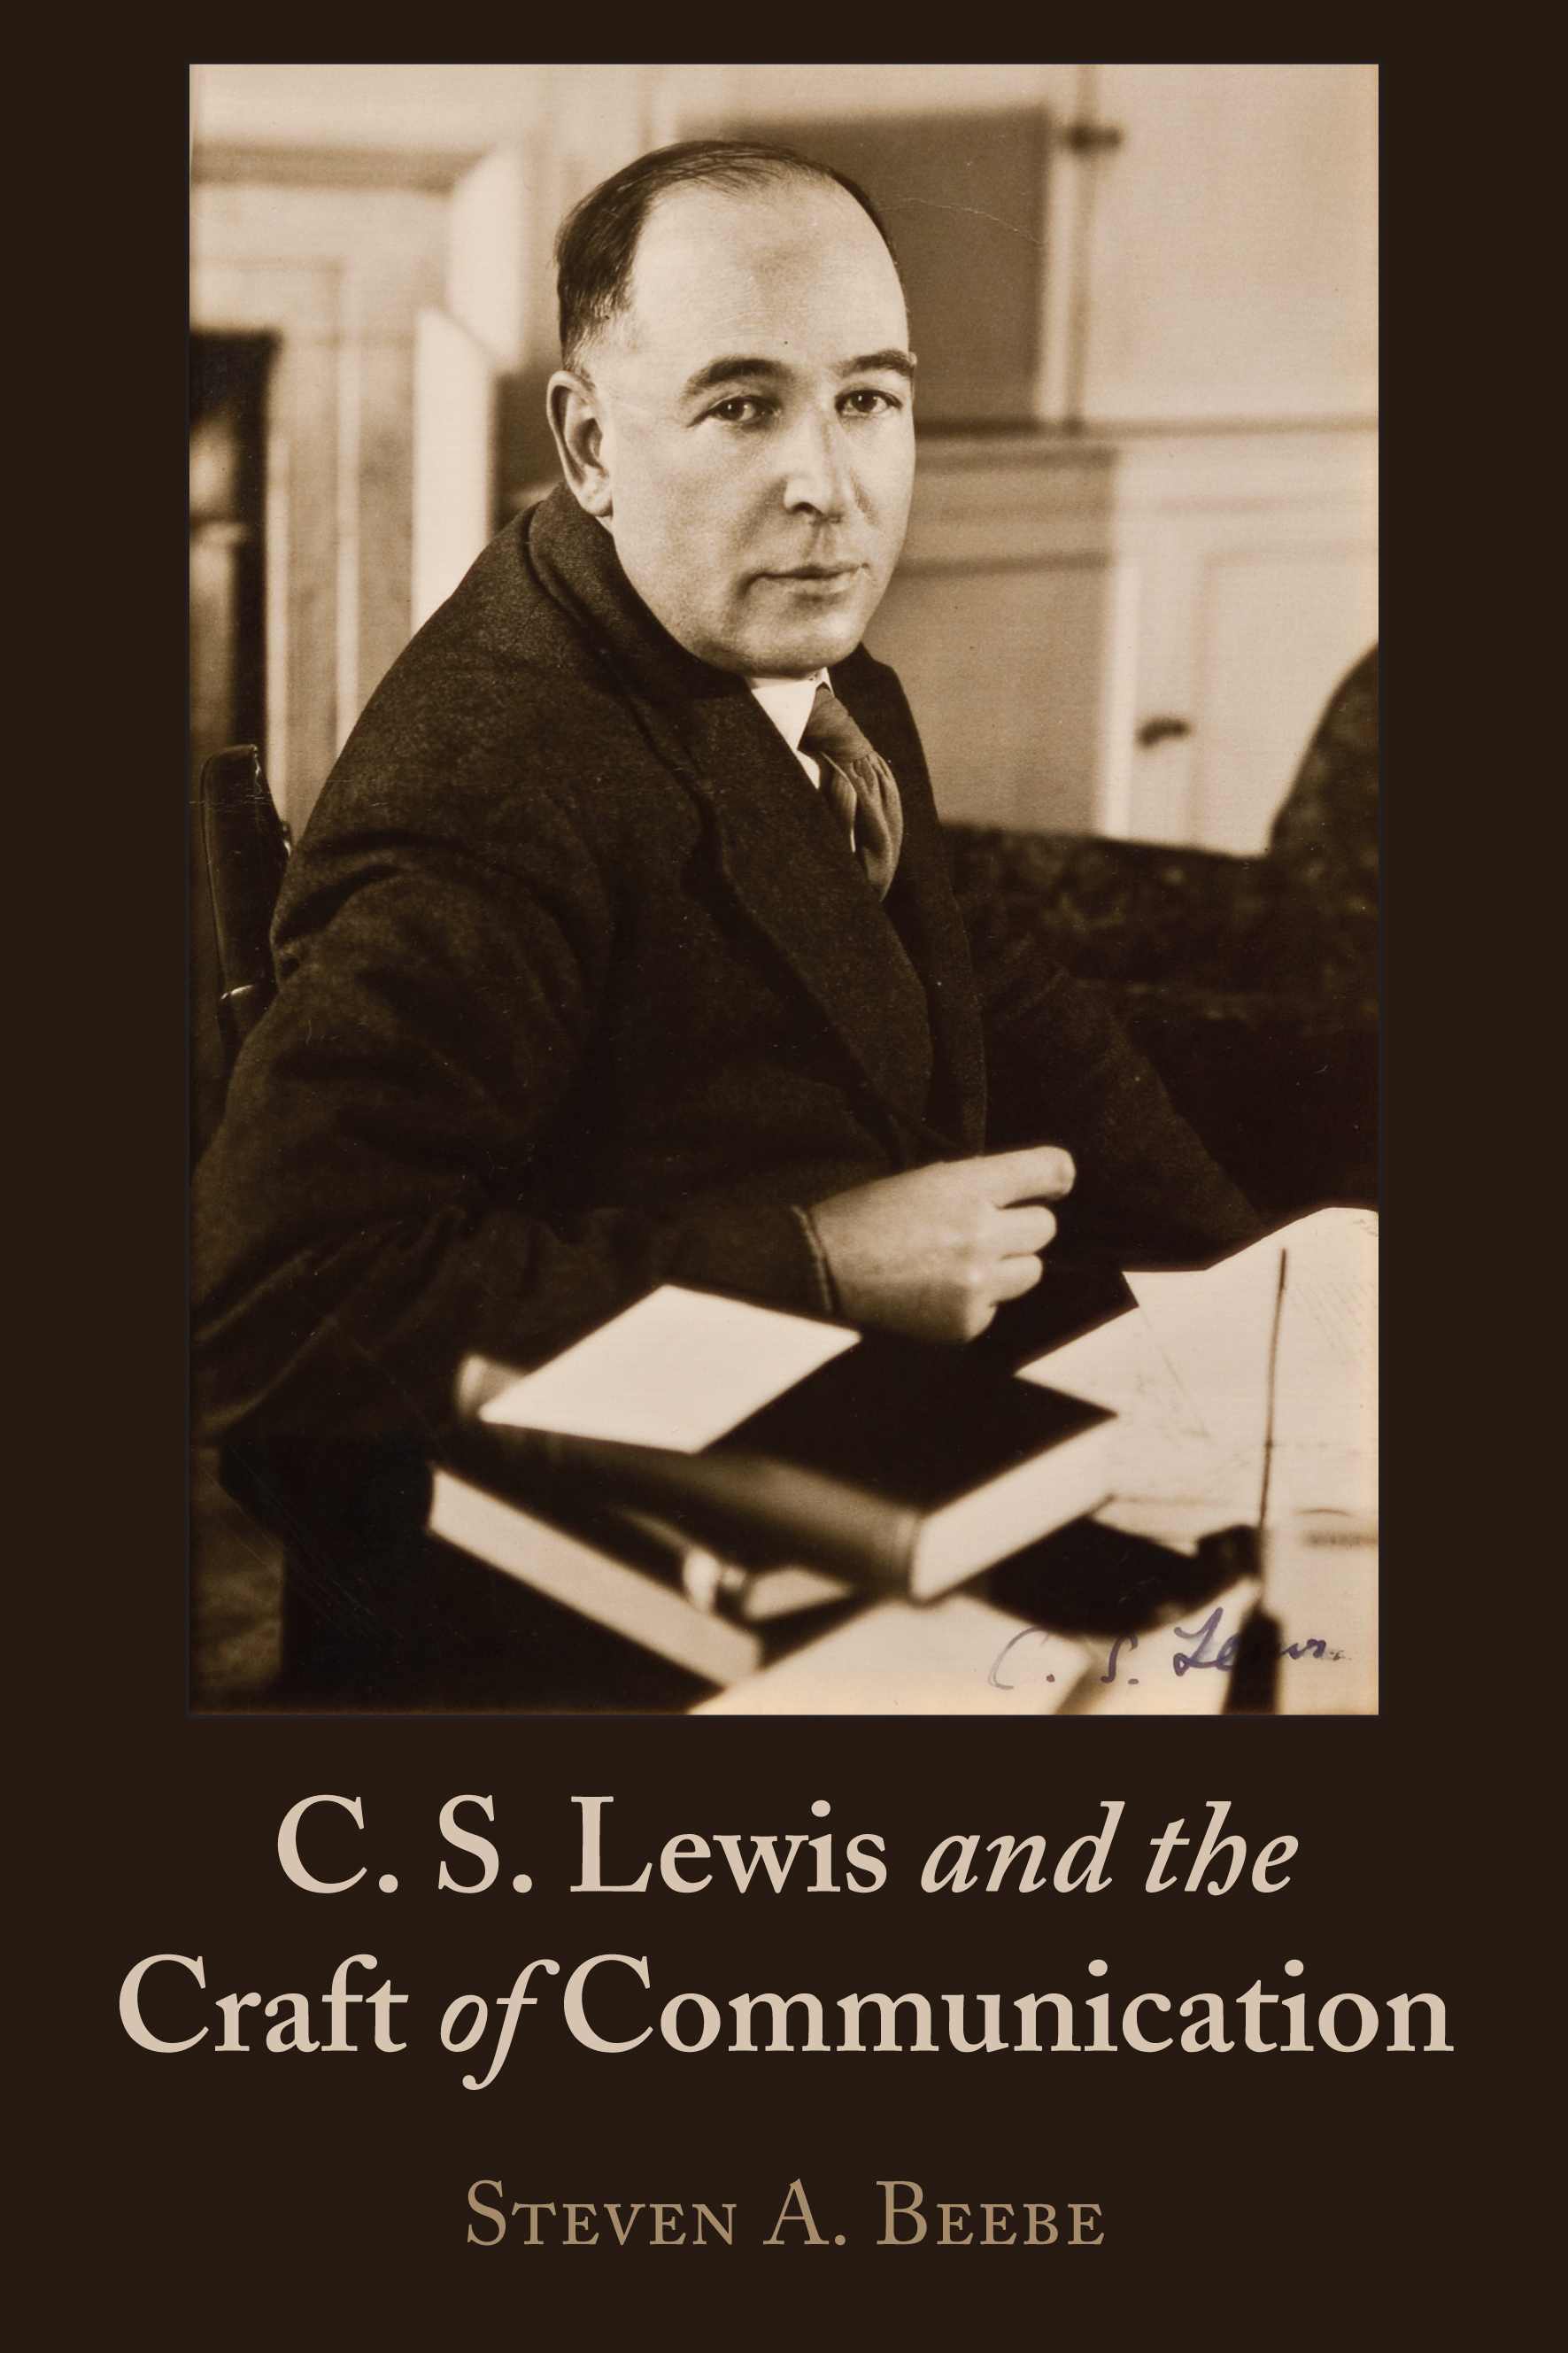 Masters of Storytelling: C.S. Lewis